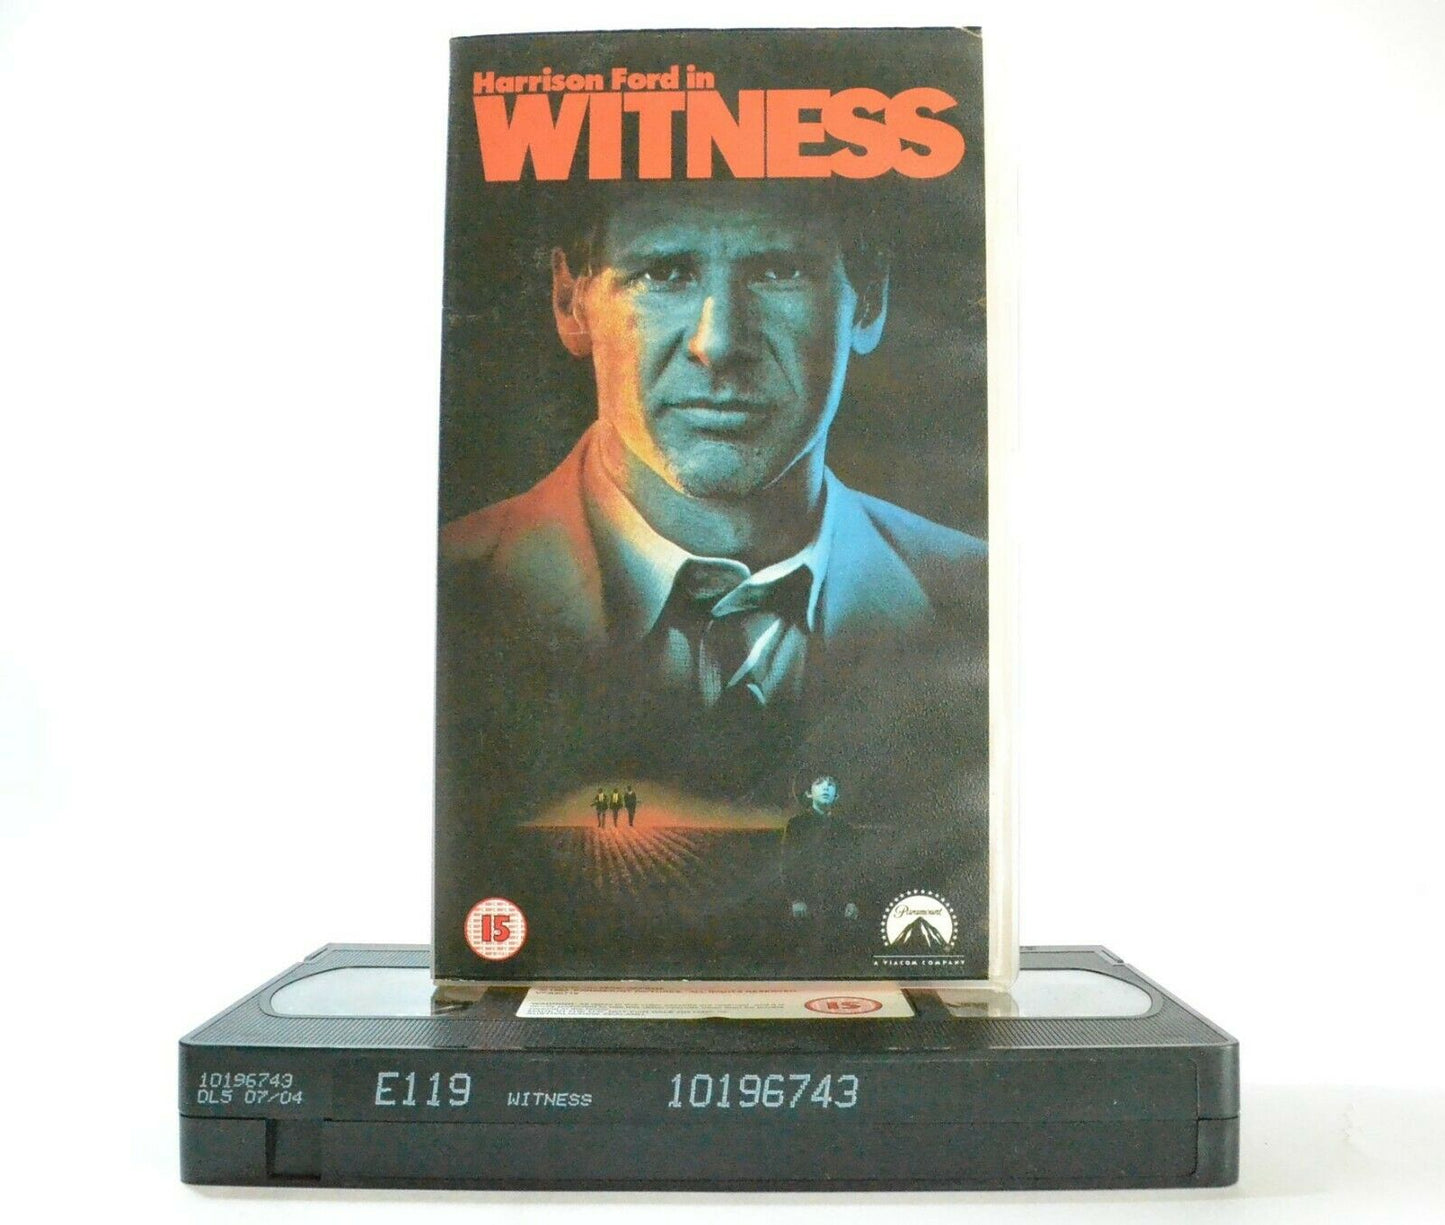 Witness: Peter Weir Film - Crime Thriller - Harrison Ford/Kelly McGillis - VHS-